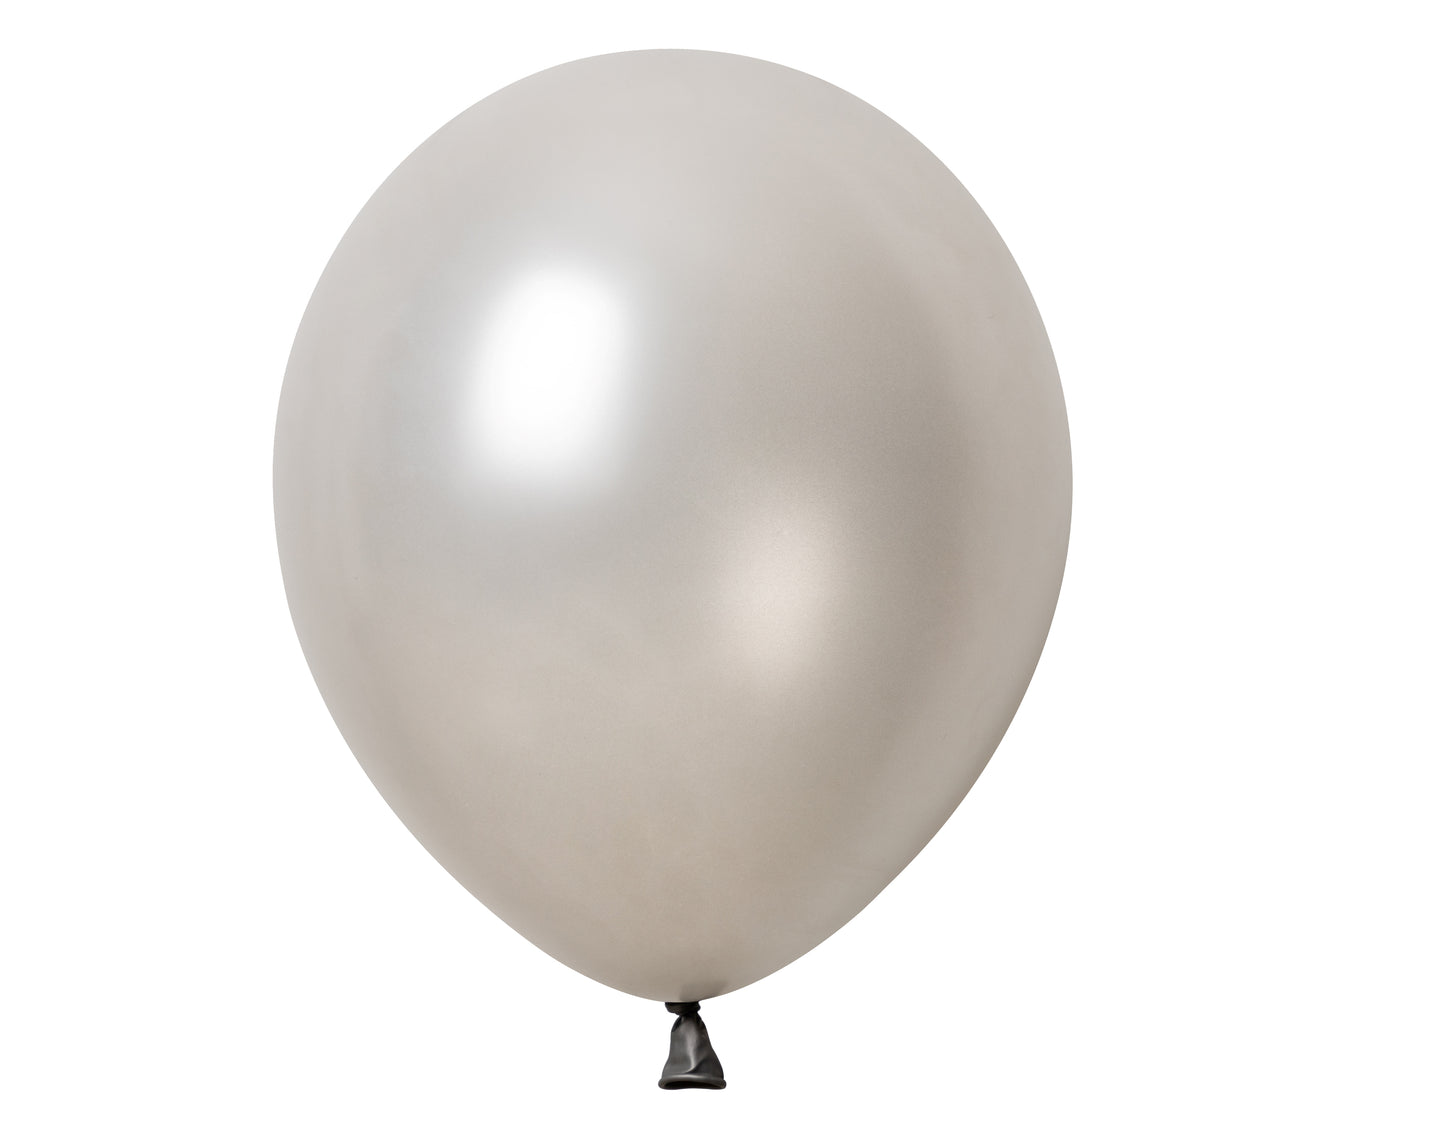 Winntex Premium 18" Metallic Silver Latex Balloon 25ct